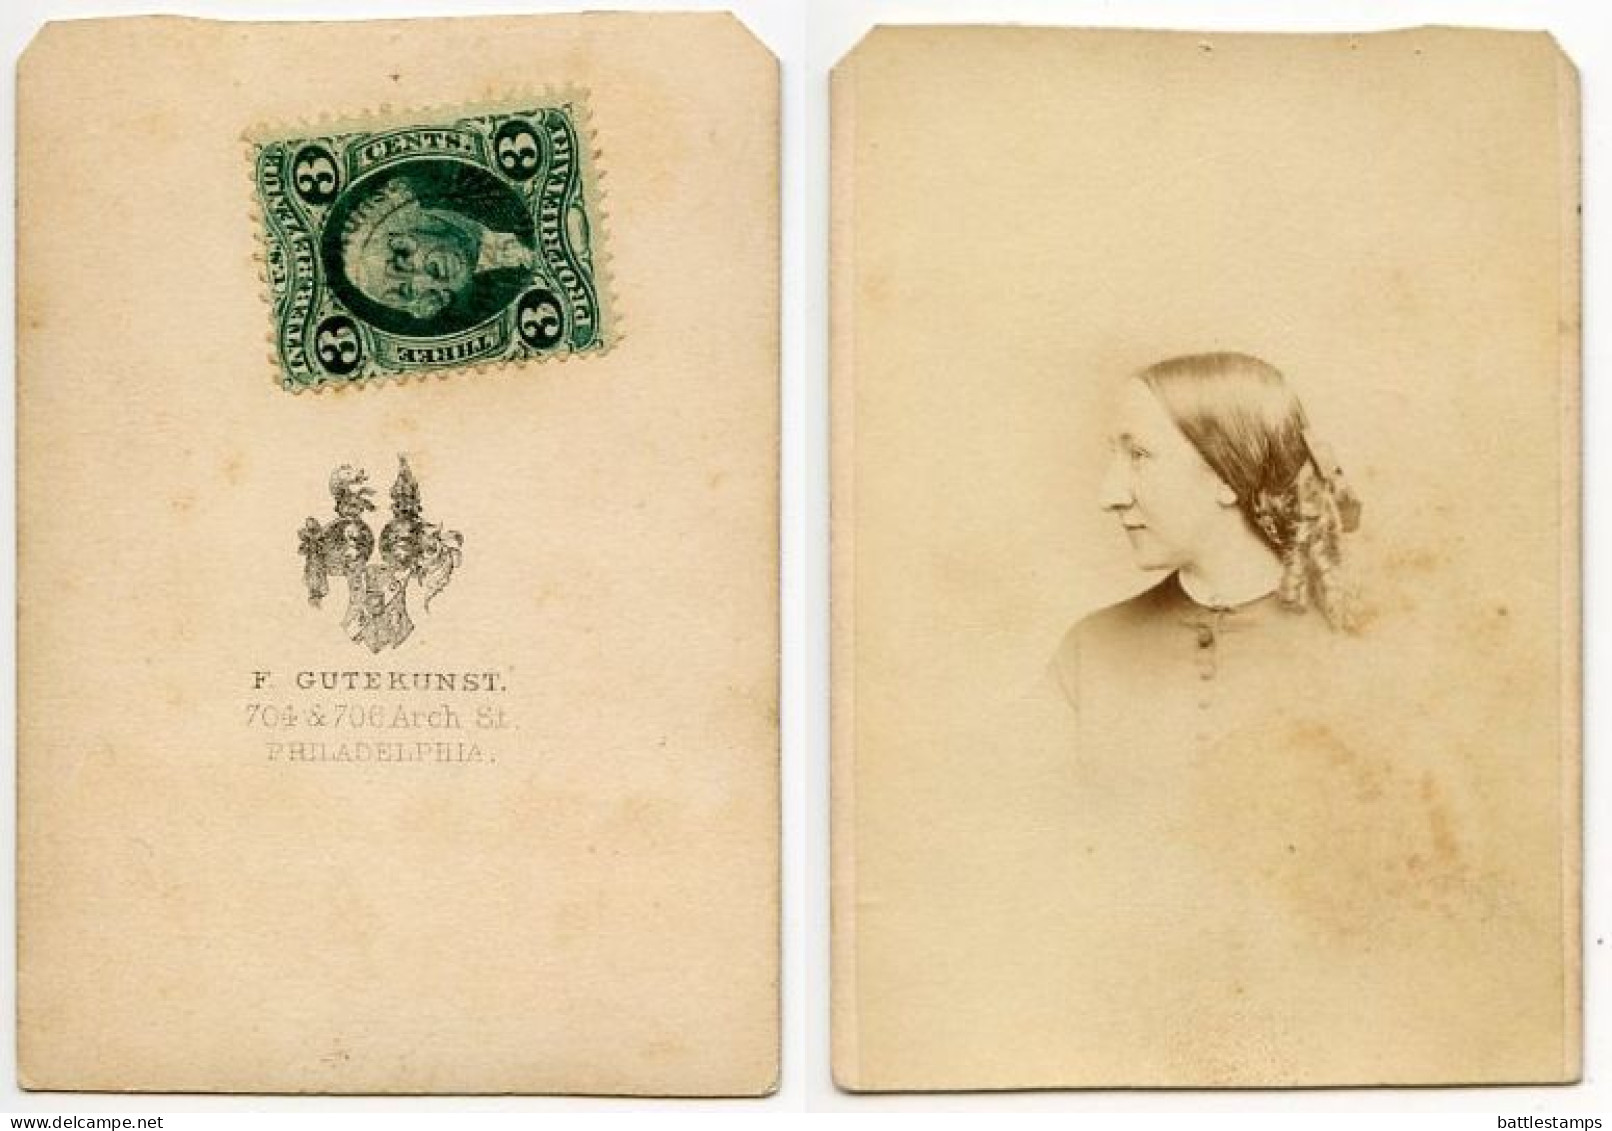 United States 1860‘s Photograph, Woman - F. Gutekun St., Philadelphia Pennsylvania, Scott R18c Revenue Stamp - Steuermarken